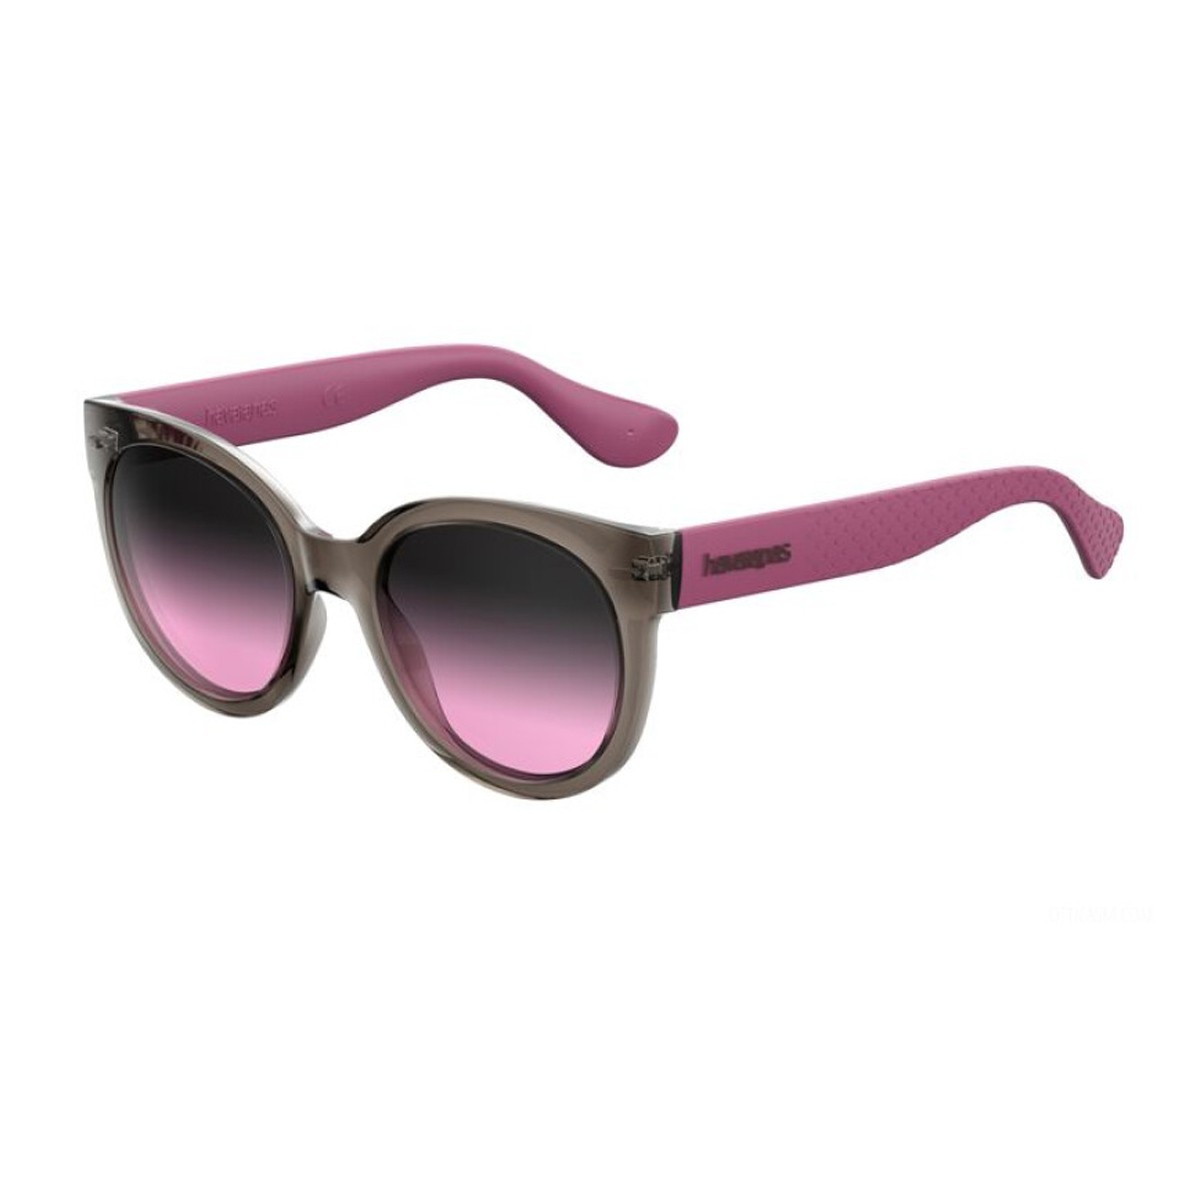 Havaianas Noronha/m | Women's sunglasses